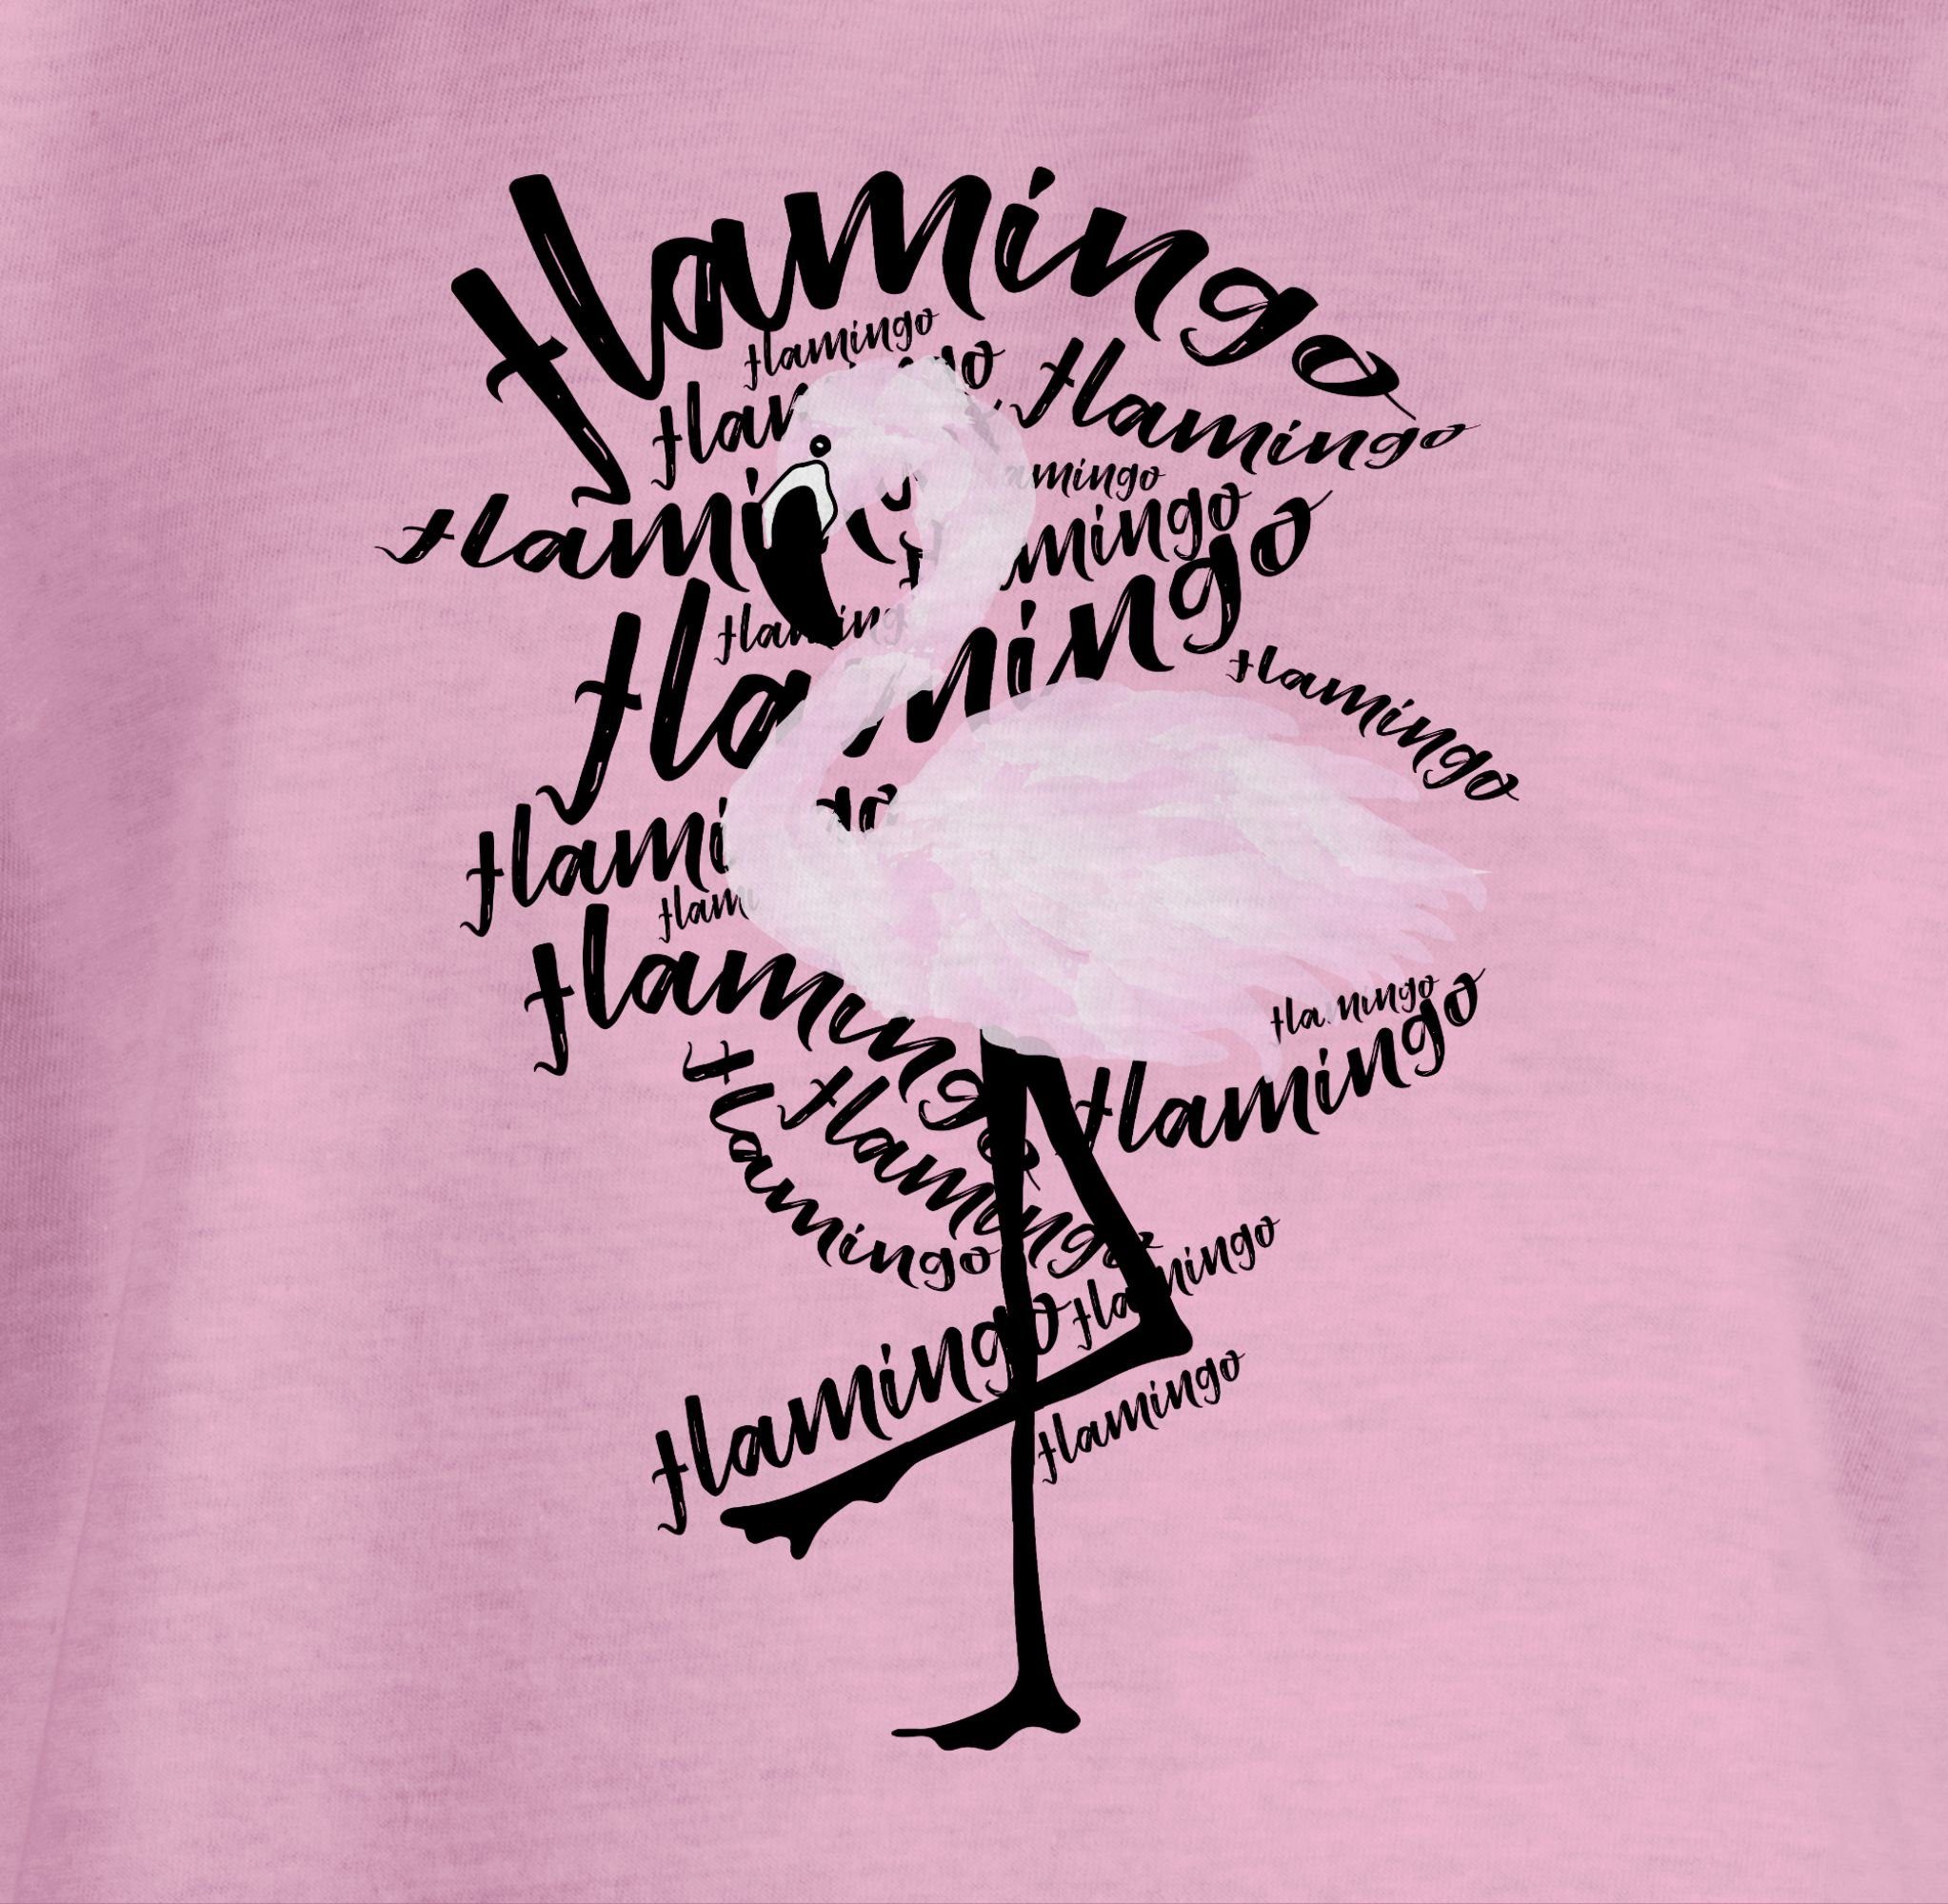 Print 2 Shirtracer Flamingo Rosa Animal Tiermotiv T-Shirt